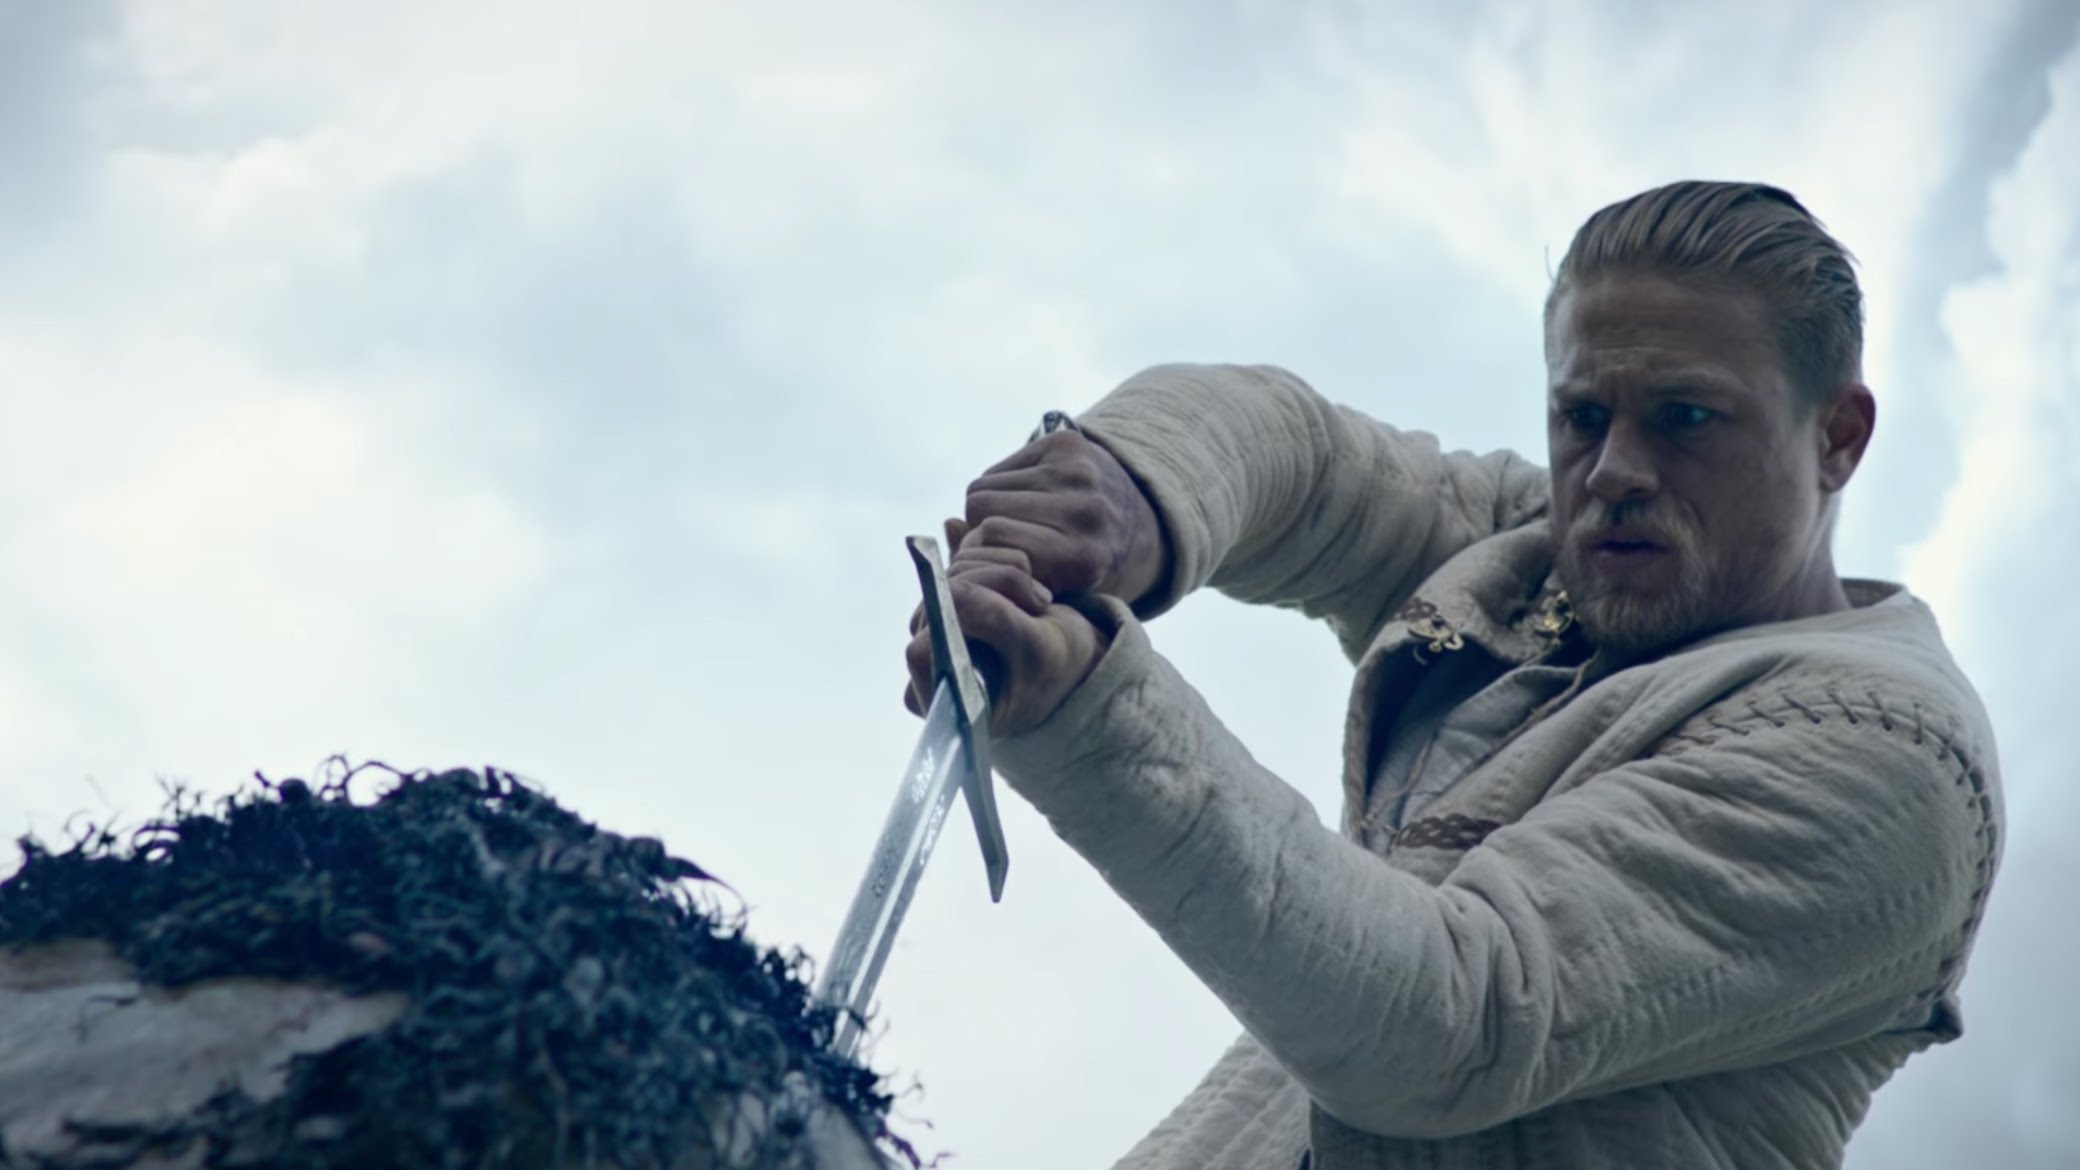 Movie King Arthur: Legend of the Sword HD Wallpaper | Background Image